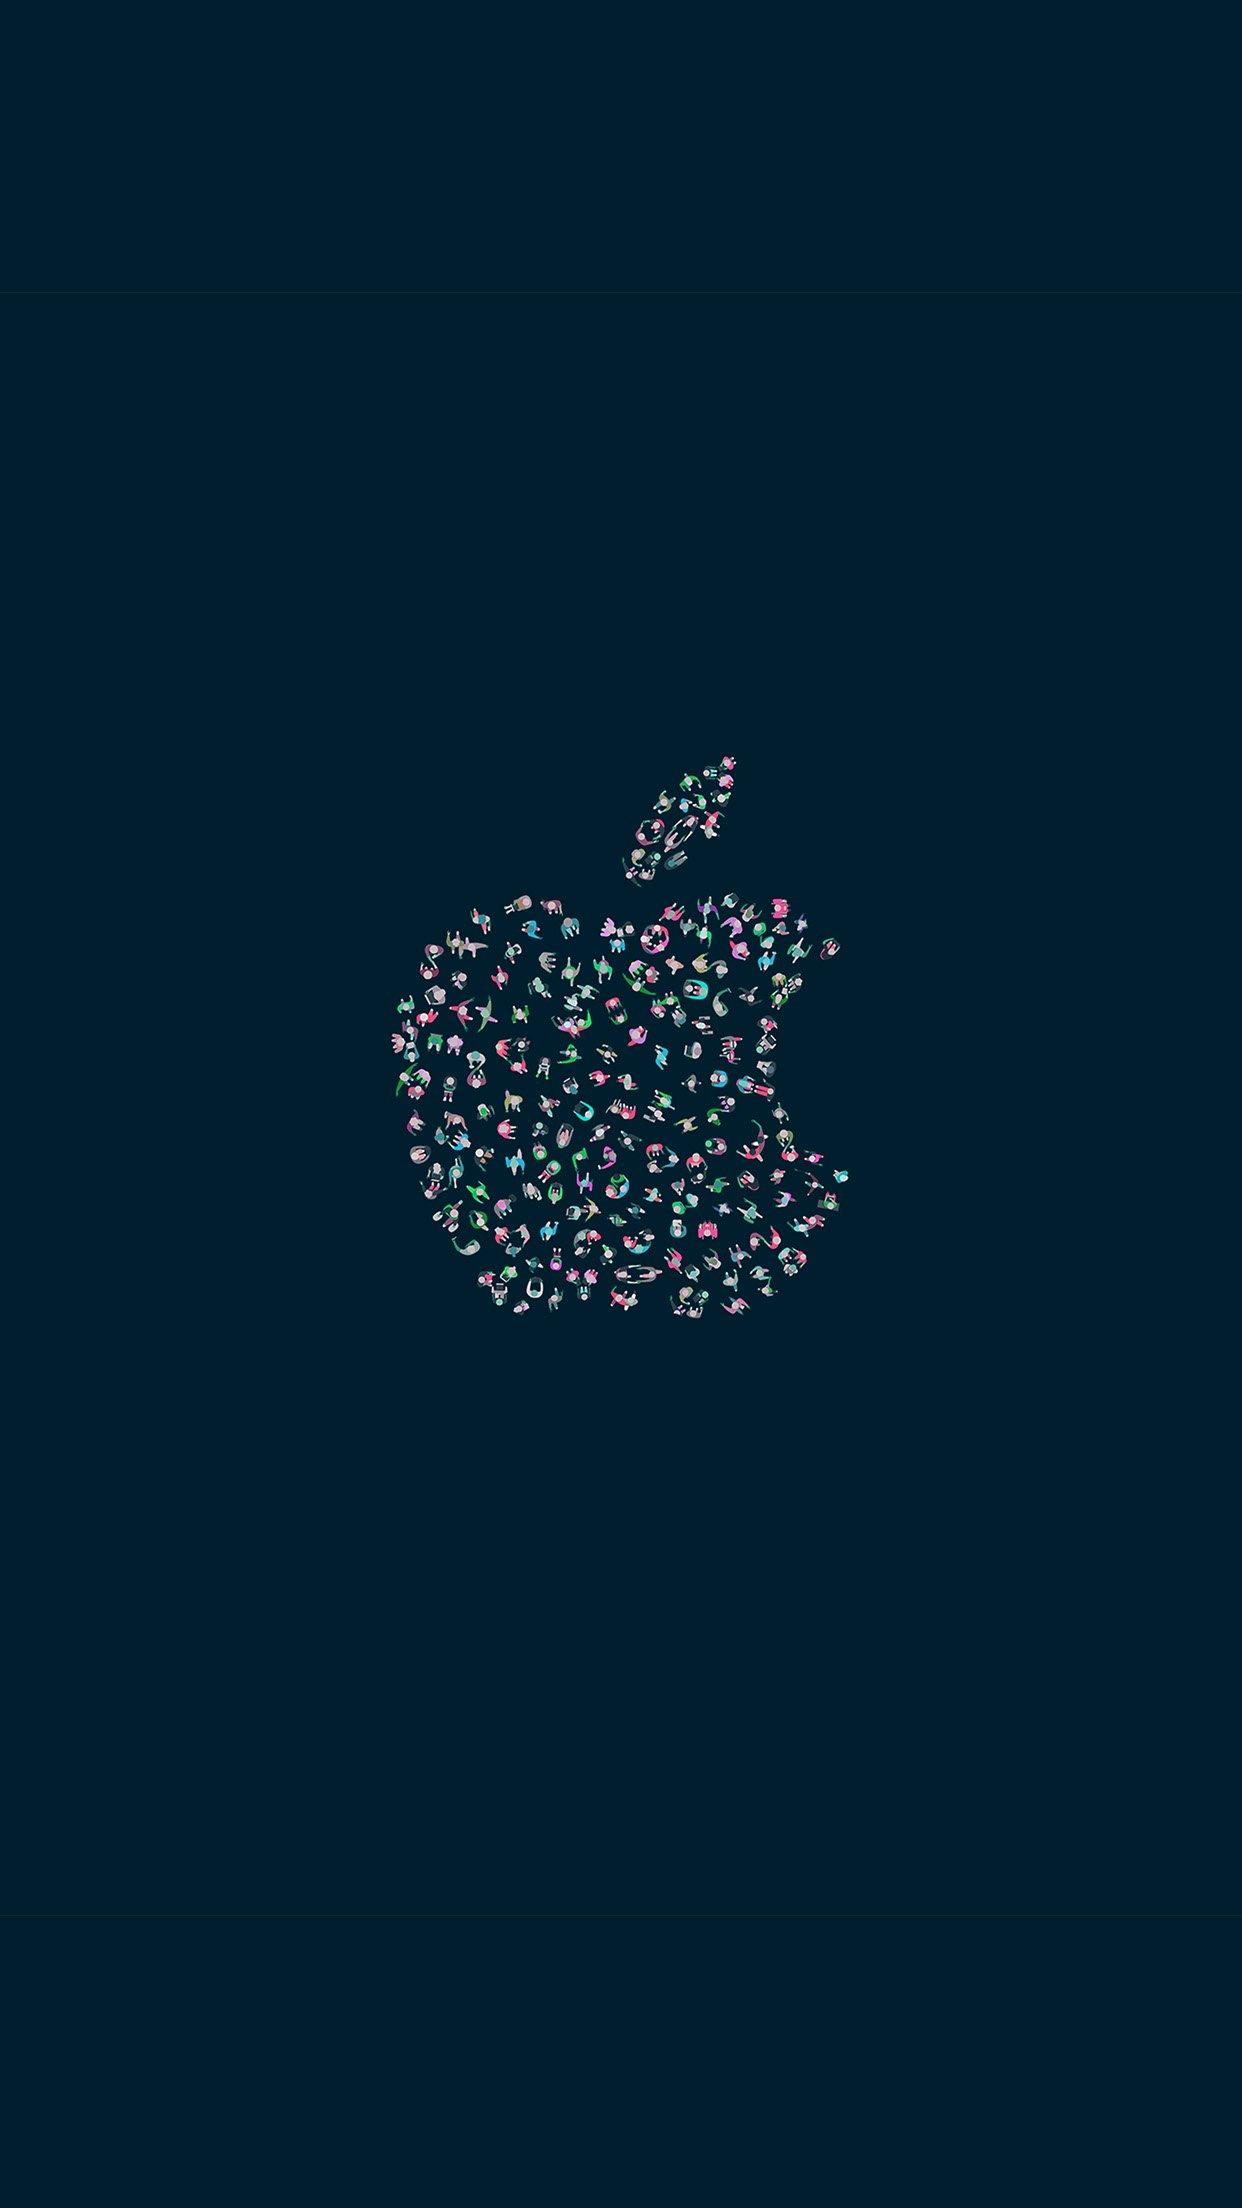 iPhone7 wallpaper. wwdc apple logo